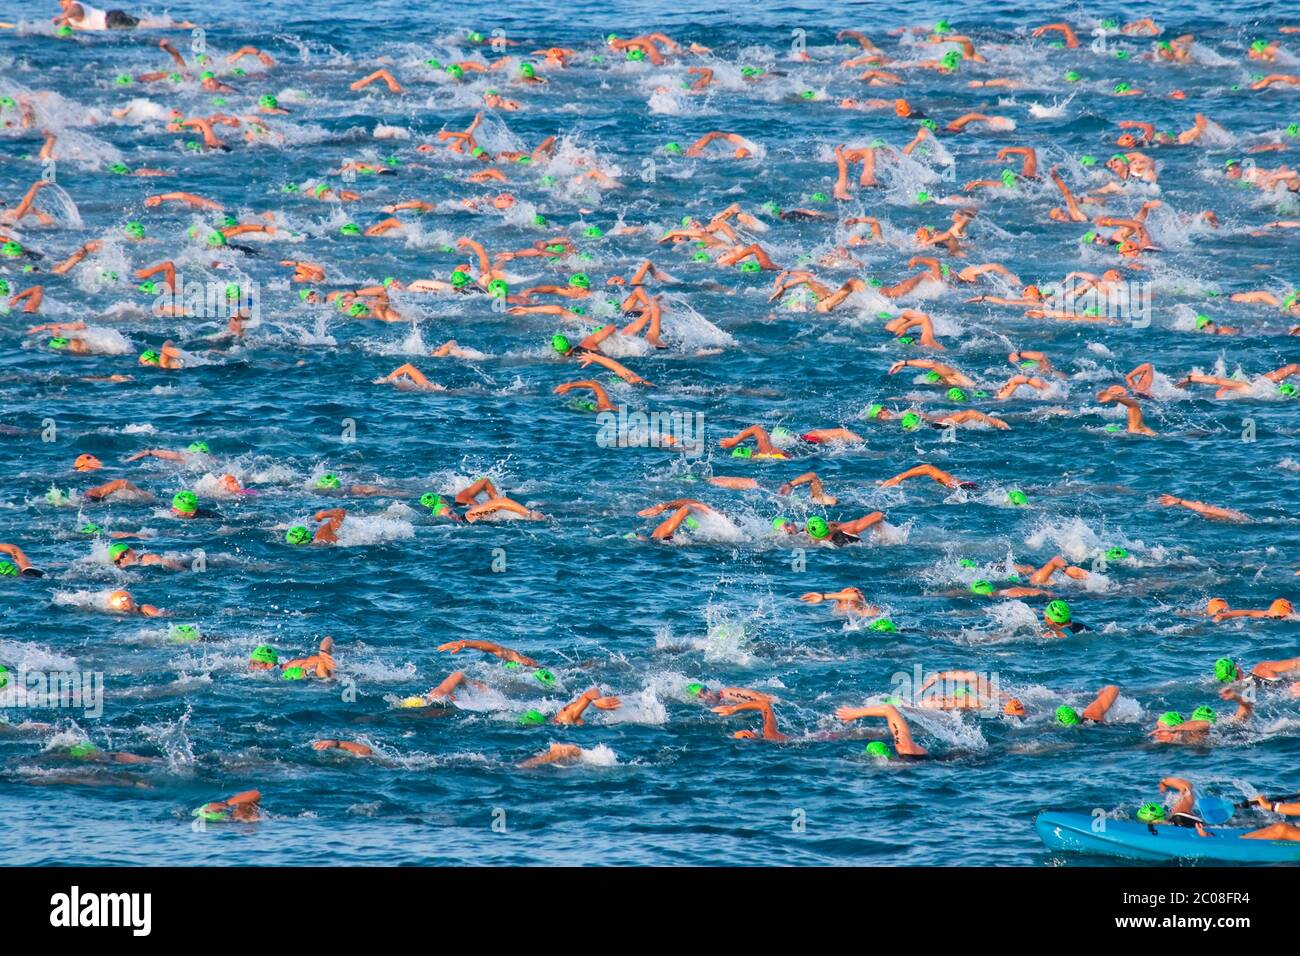 Swim Start of World Championship Ironman Triathlon, Kailua Kona, Hawaii Stock Photo